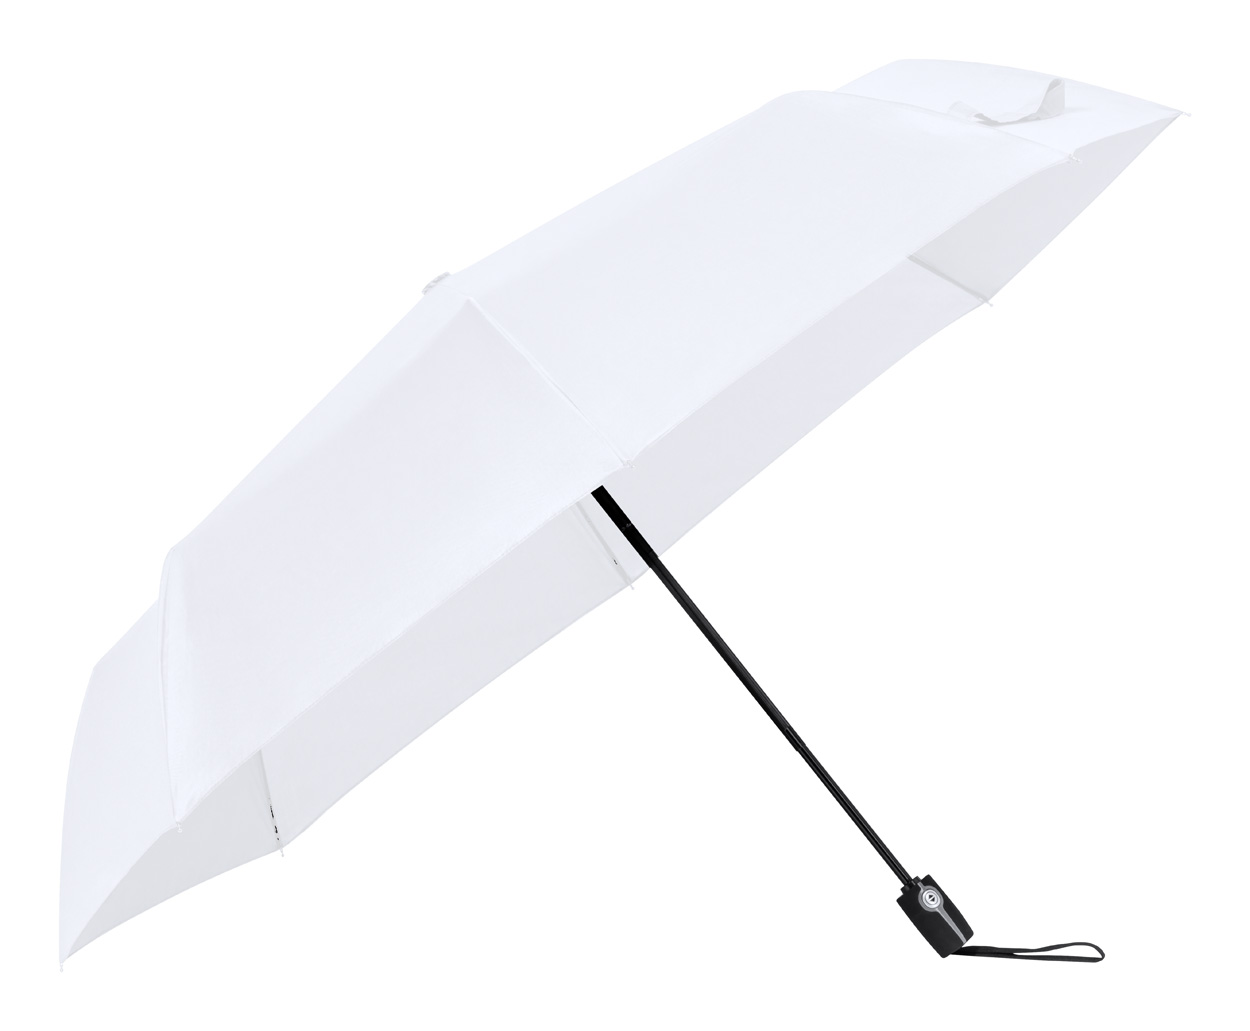 Krastony RPET deštník - bílá